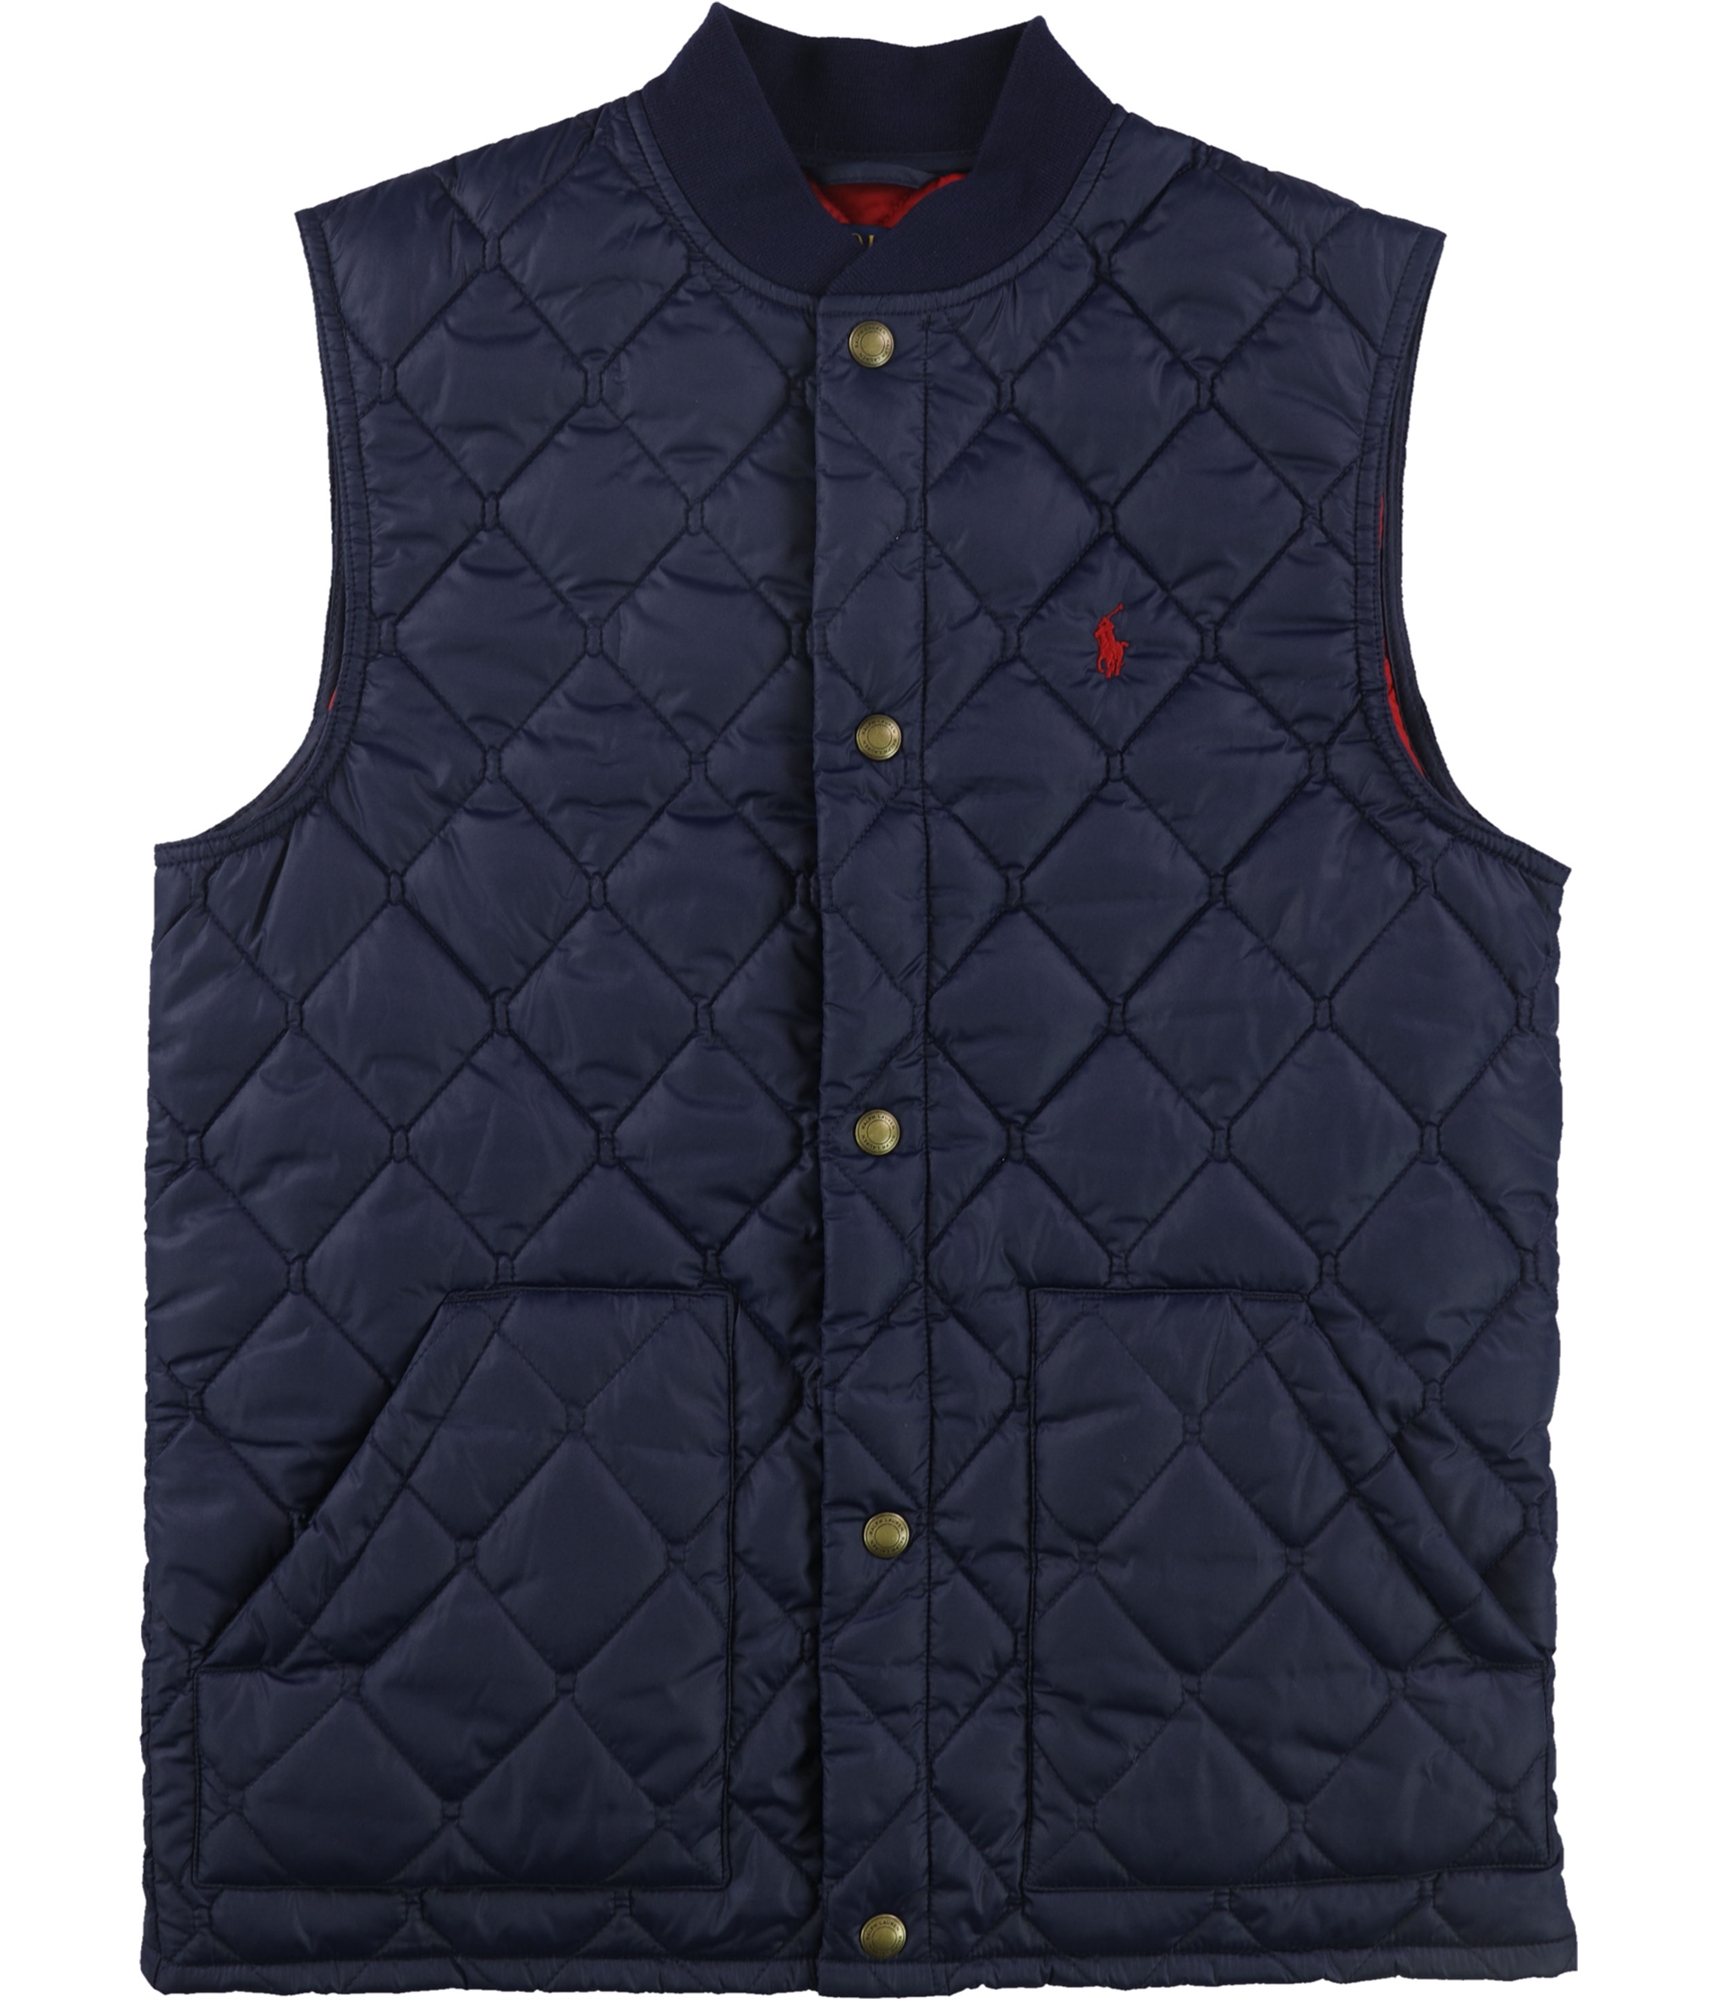 Ralph Lauren Boys Quilted Outerwear Vest, Blue, 14-16 | eBay